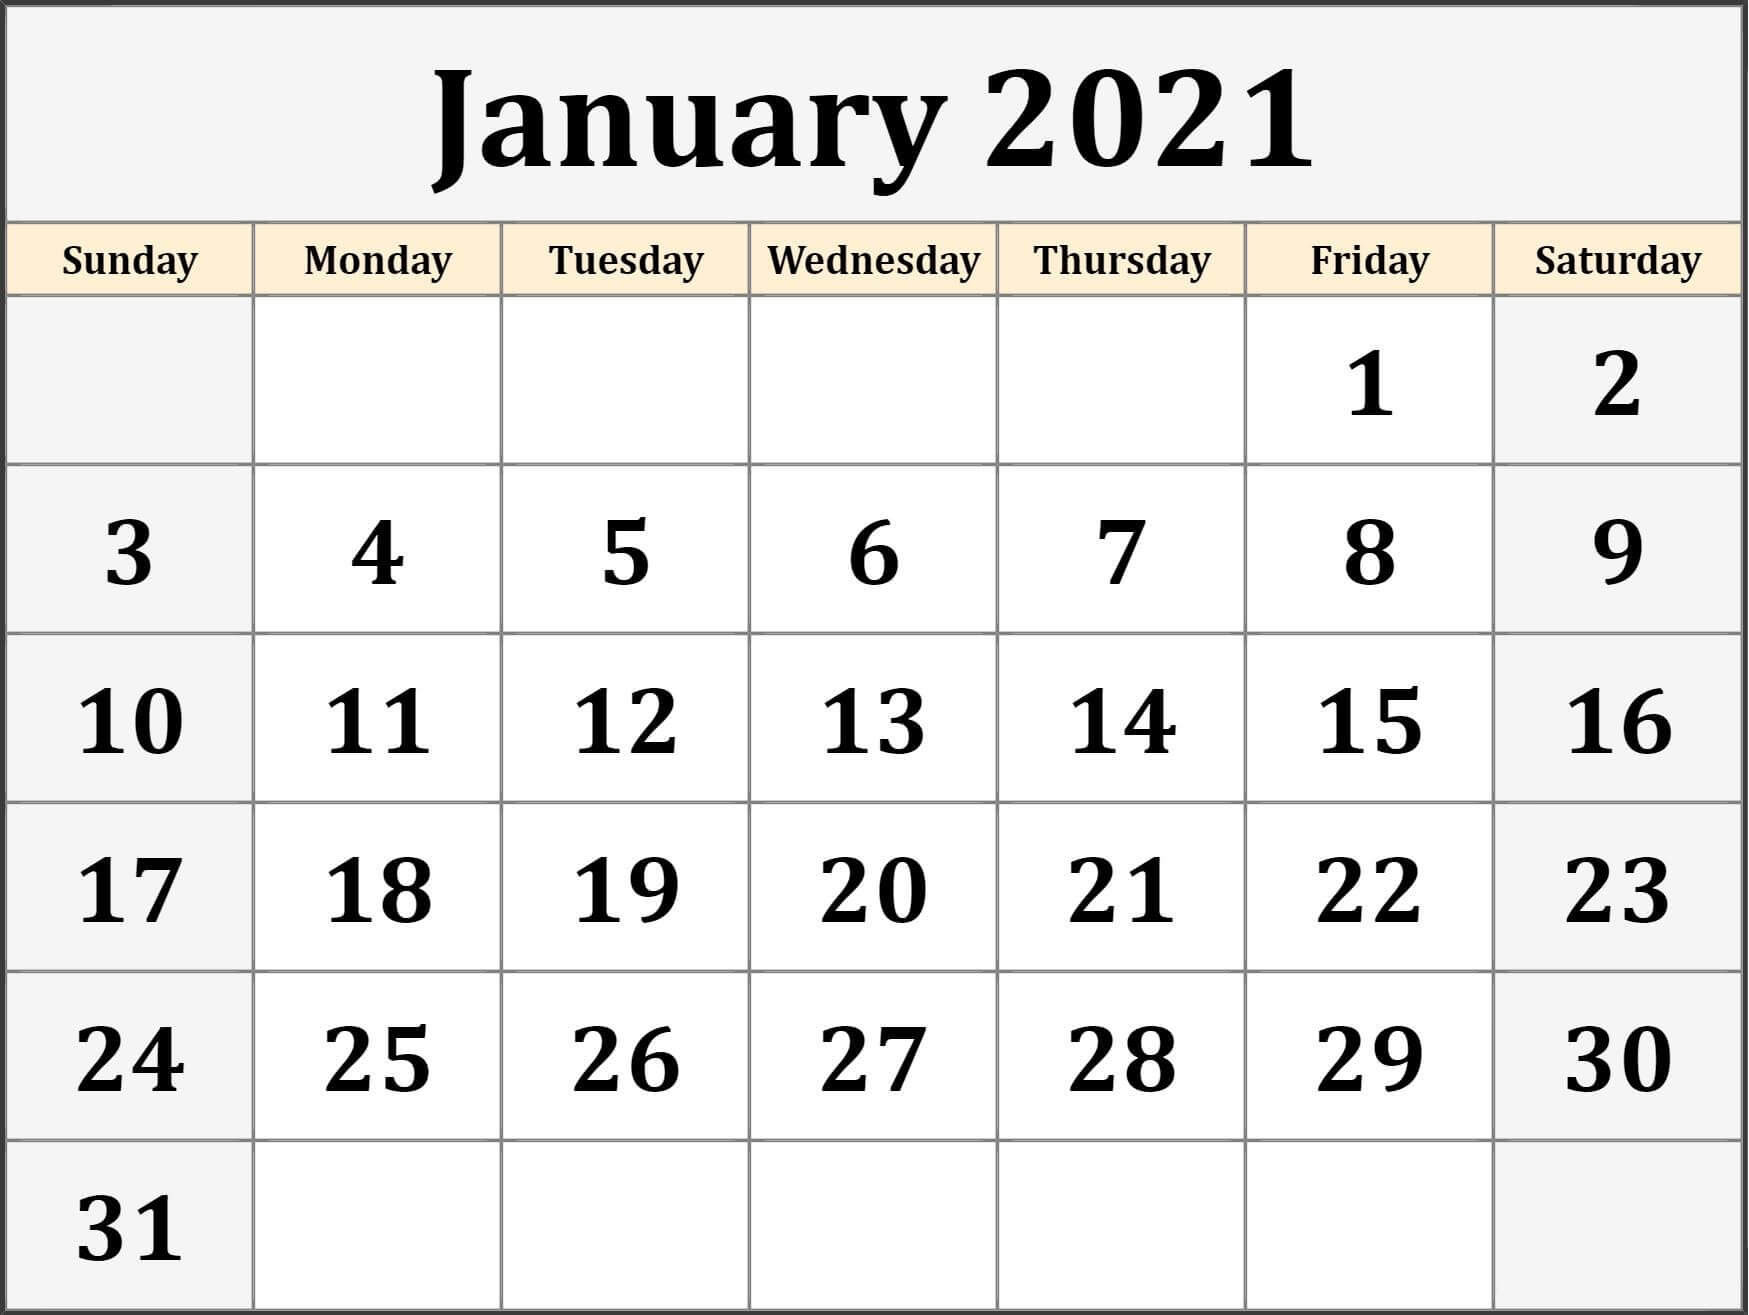 January 2021 Calendar Template Printable Holidays Images  Word January 2021 Template